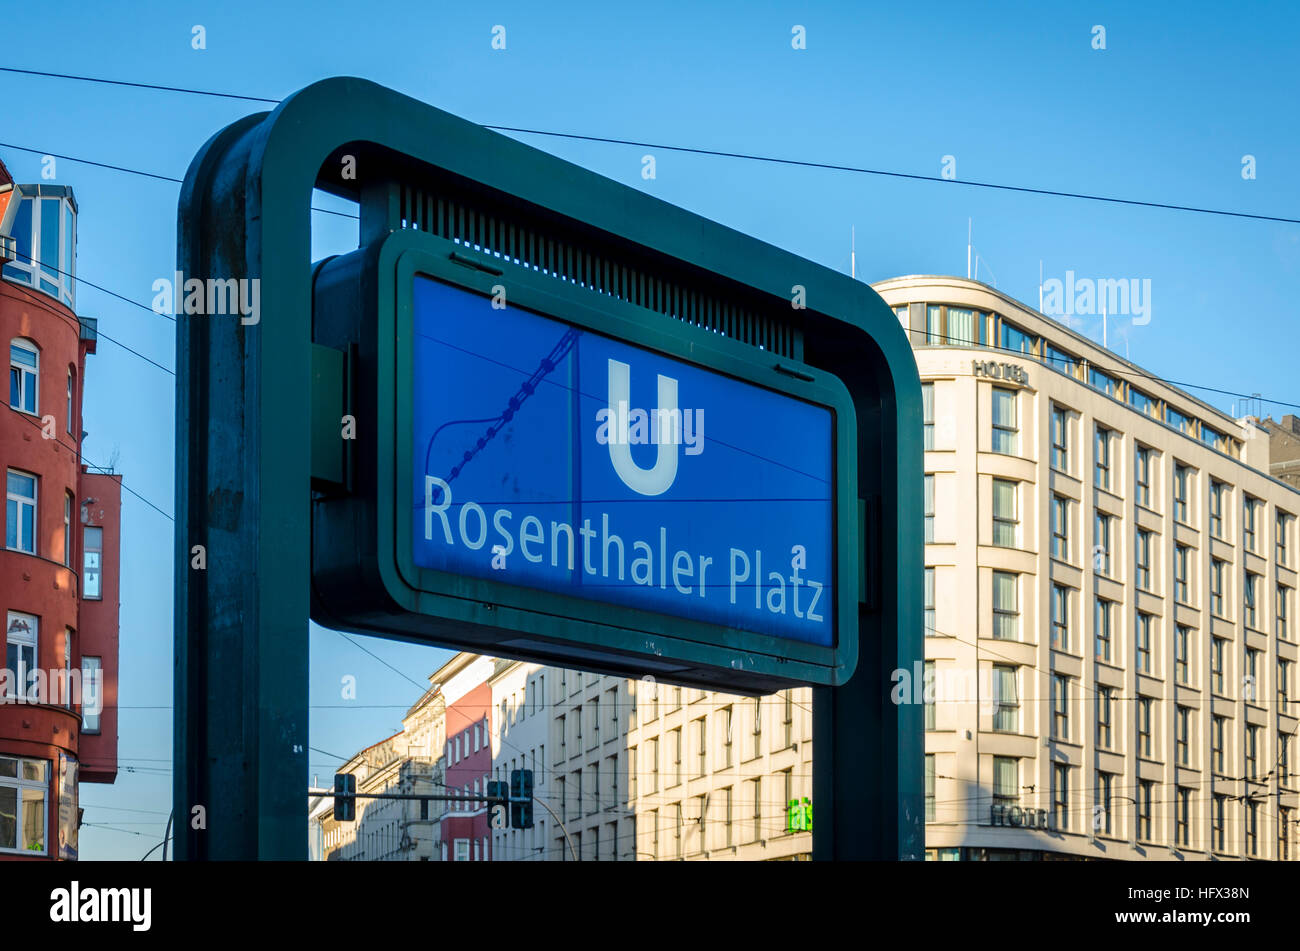 Rosenthaler Platz U Station sign, Berlin, Germany Stock Photo